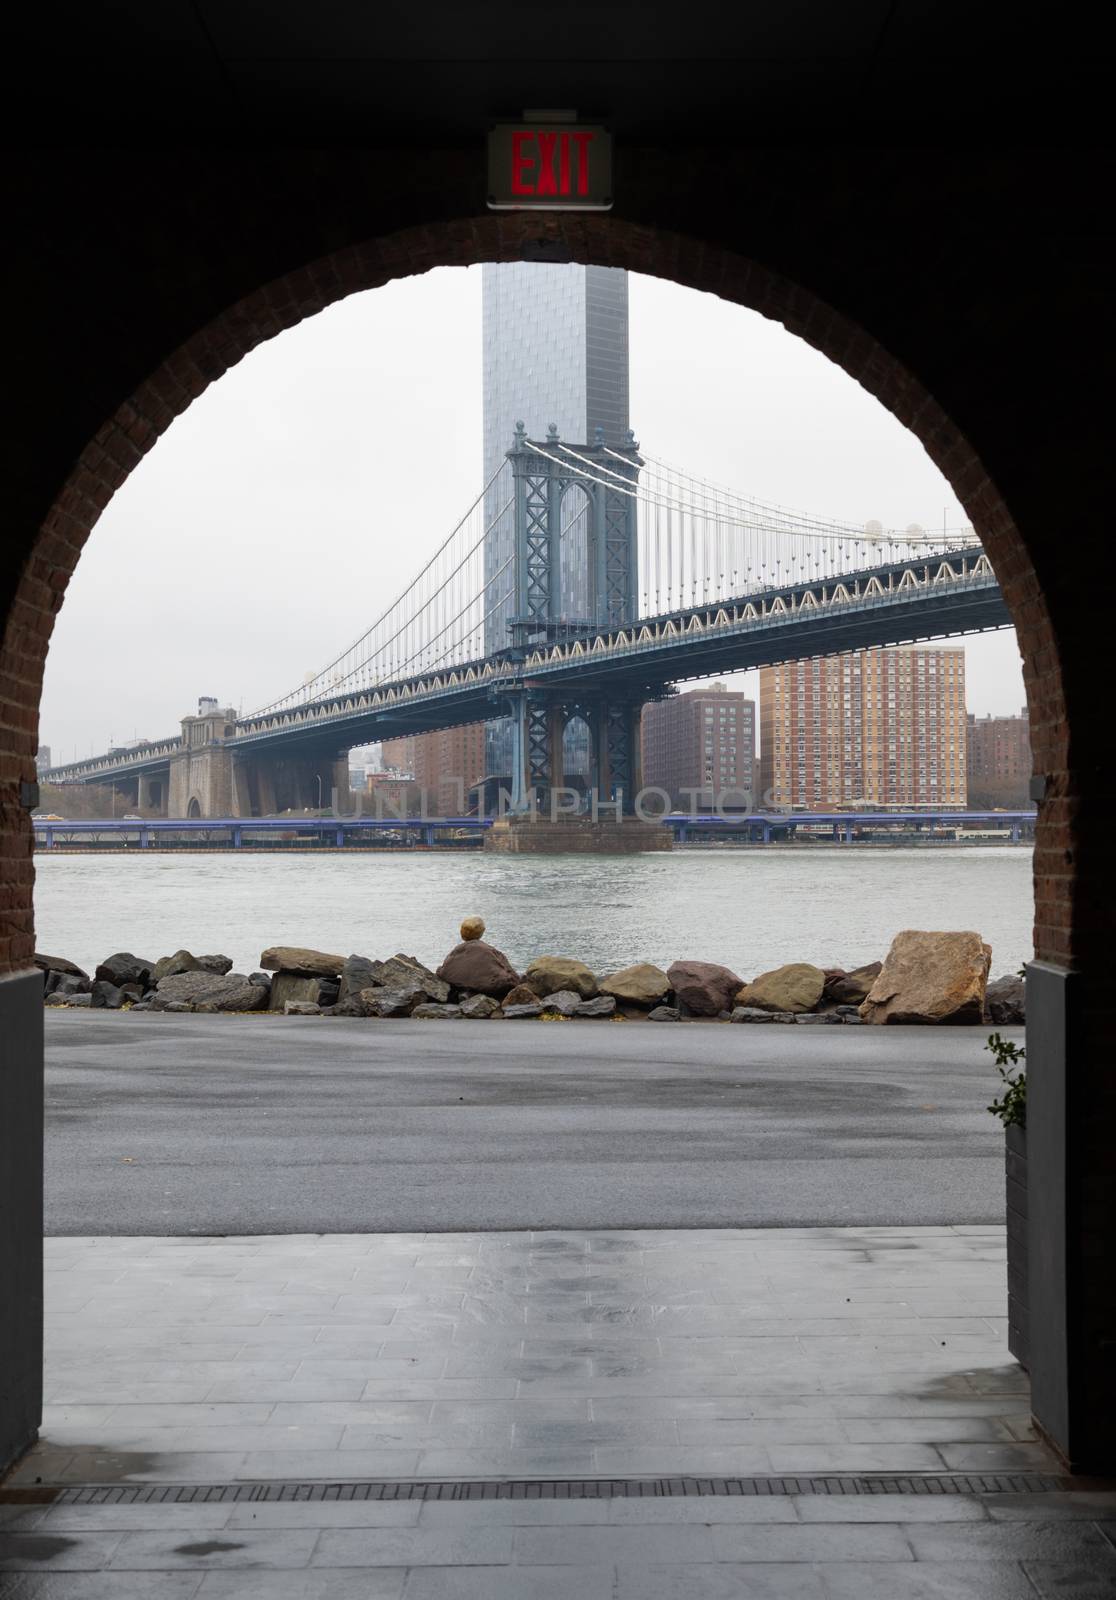 Pillar of Manhattan Bridge as seen from an brick arch gate in Dumbo district, Brooklyn